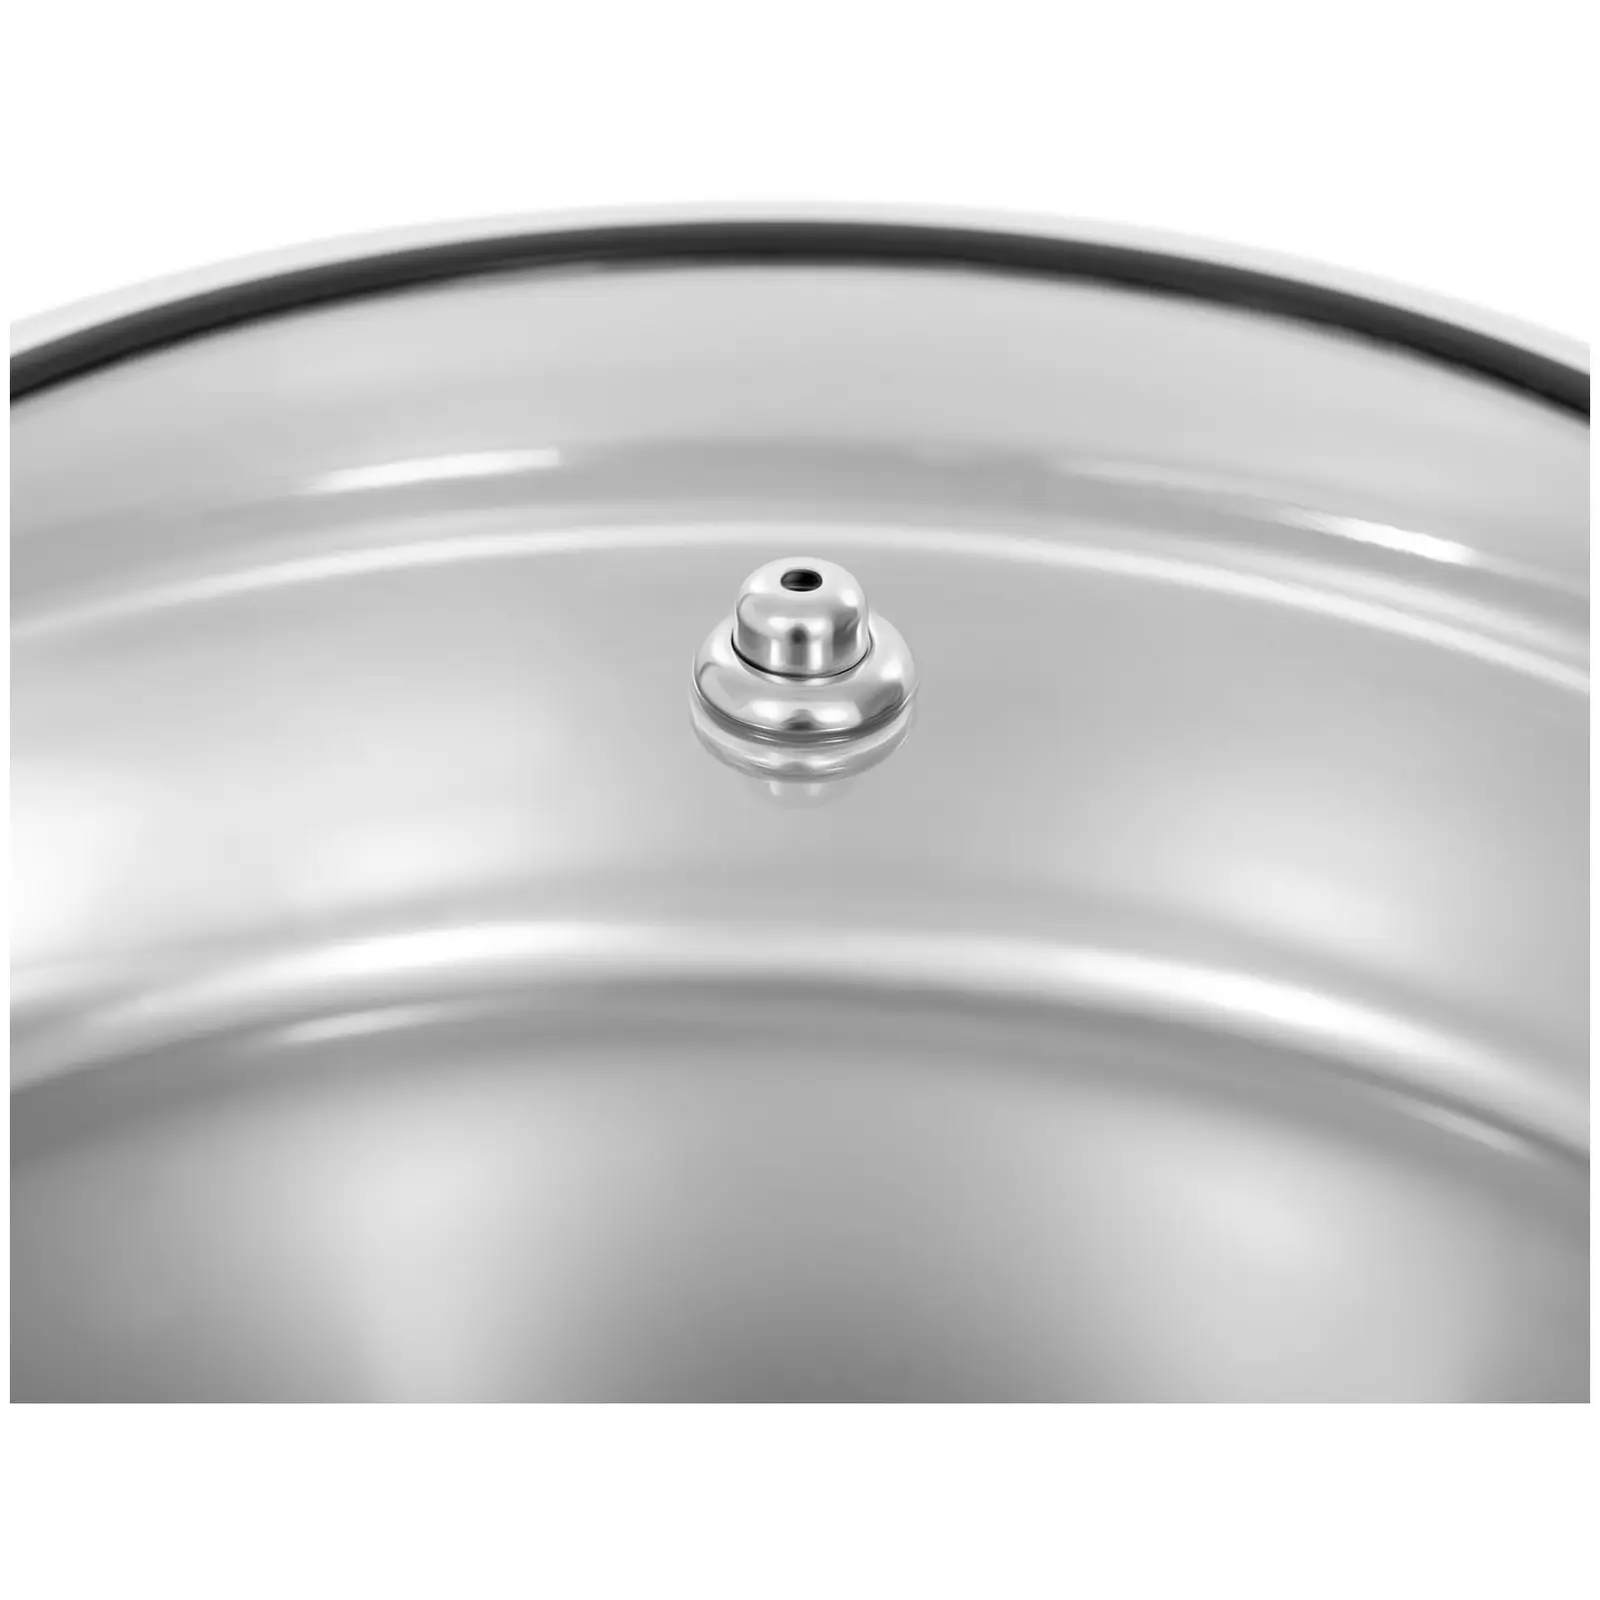 B-varer Chafing Dish - rund med visningsvindu - Royal Catering - 5.5 L - bre